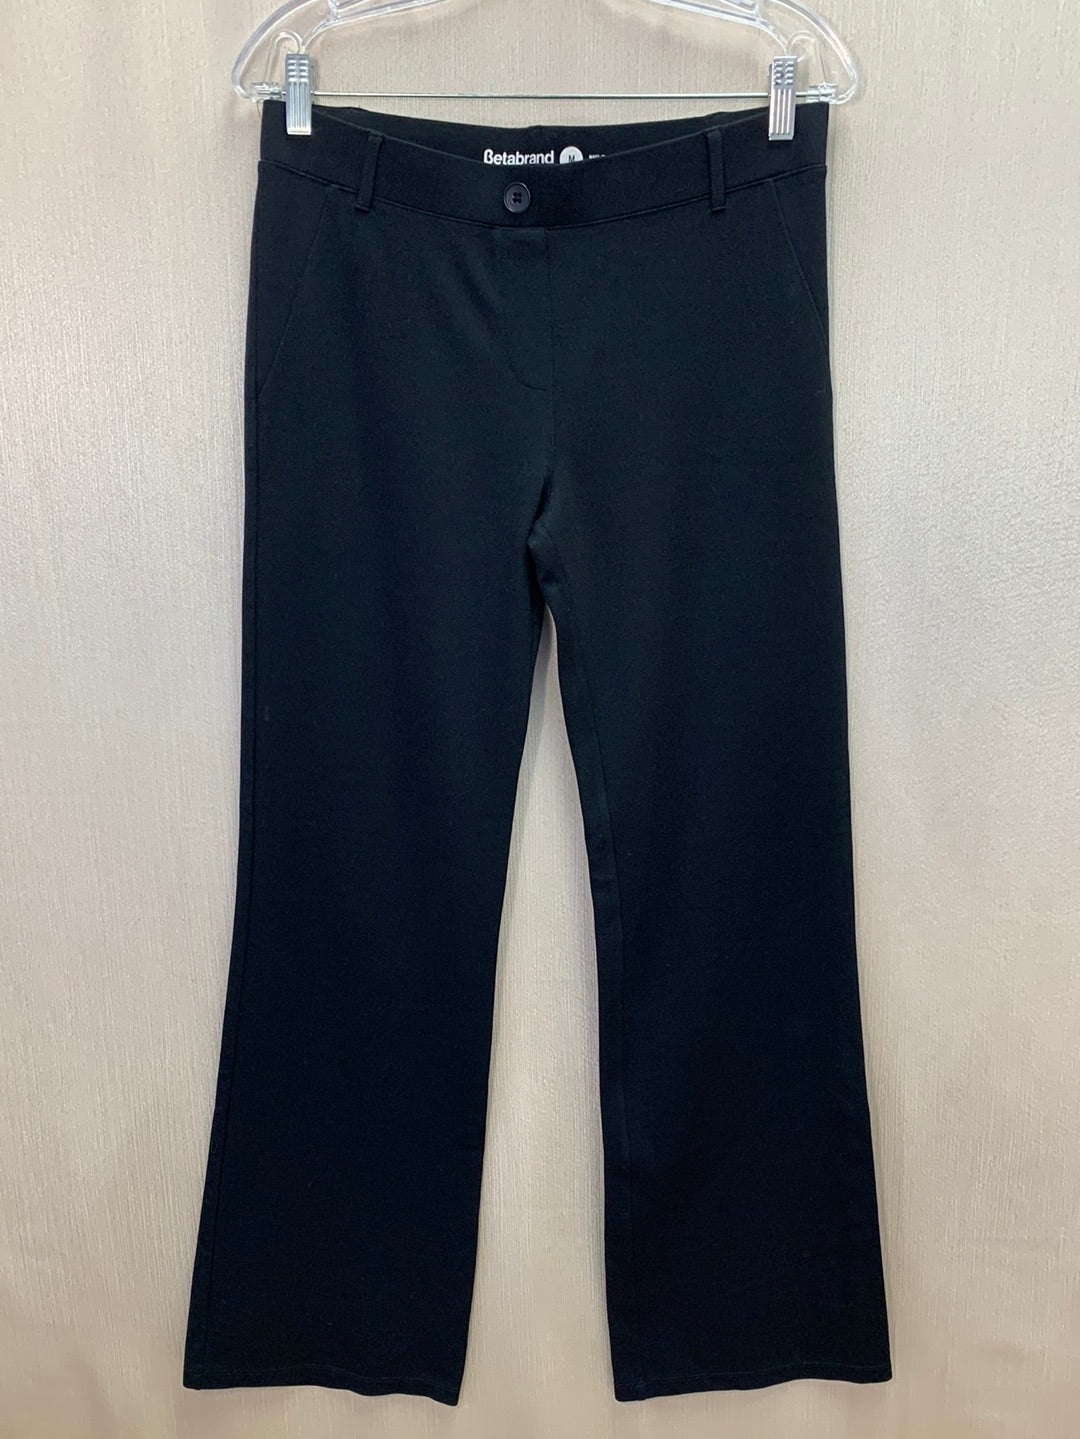 BETABRAND black shimmer Classic Bootcut Dress Yoga Pants - PM (flaw)